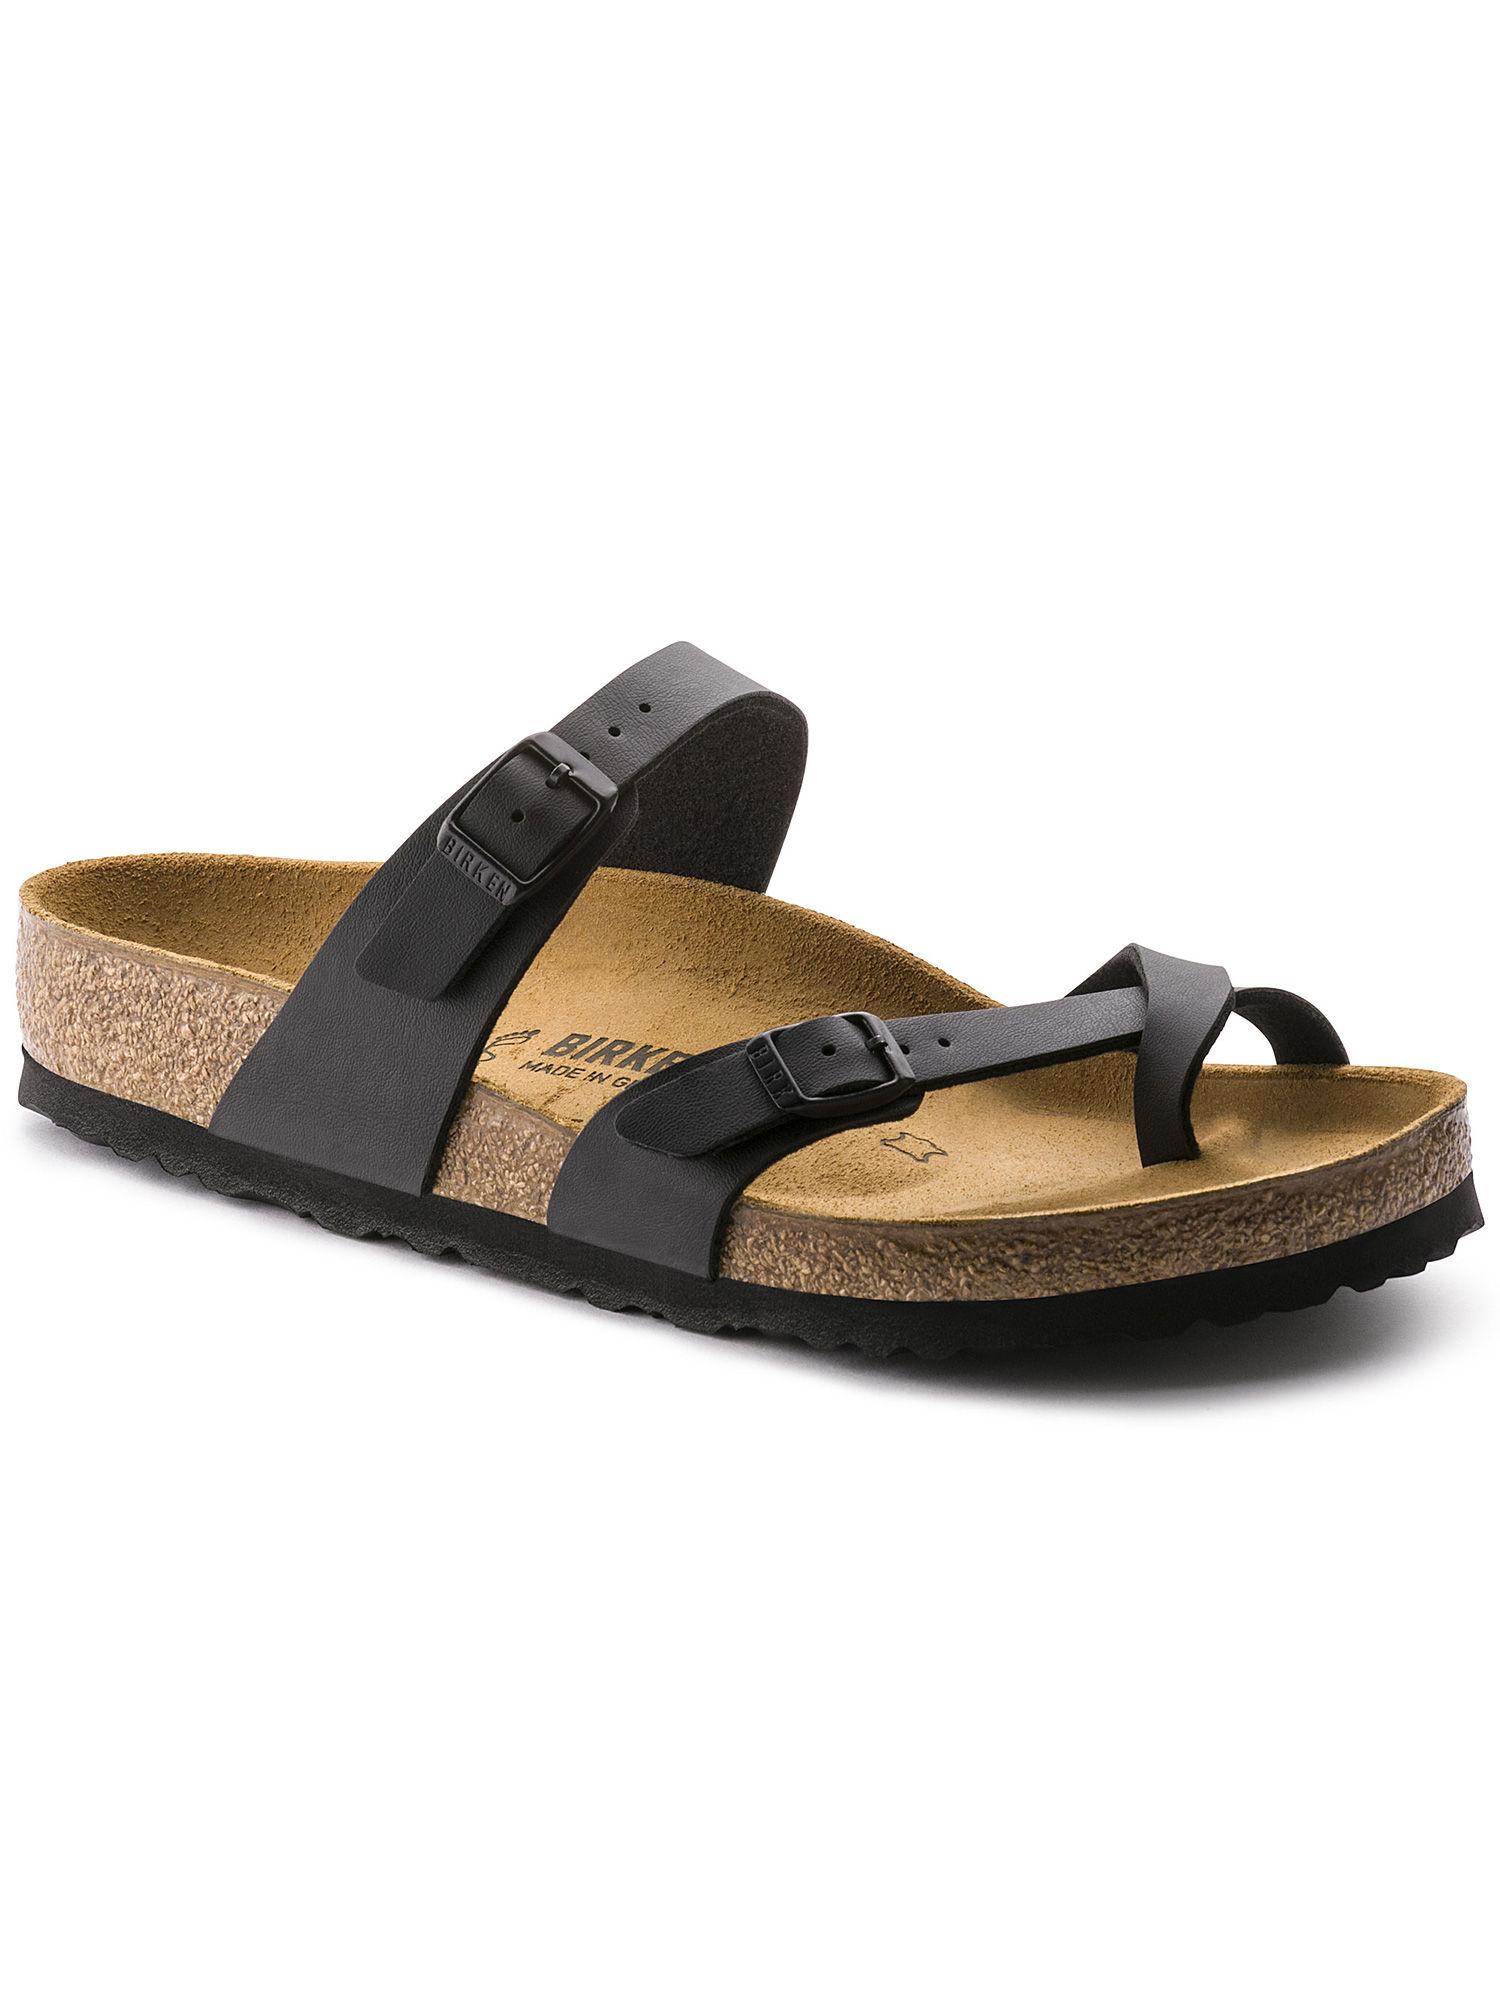 mayari birko-flor black narrow width unisex sandals